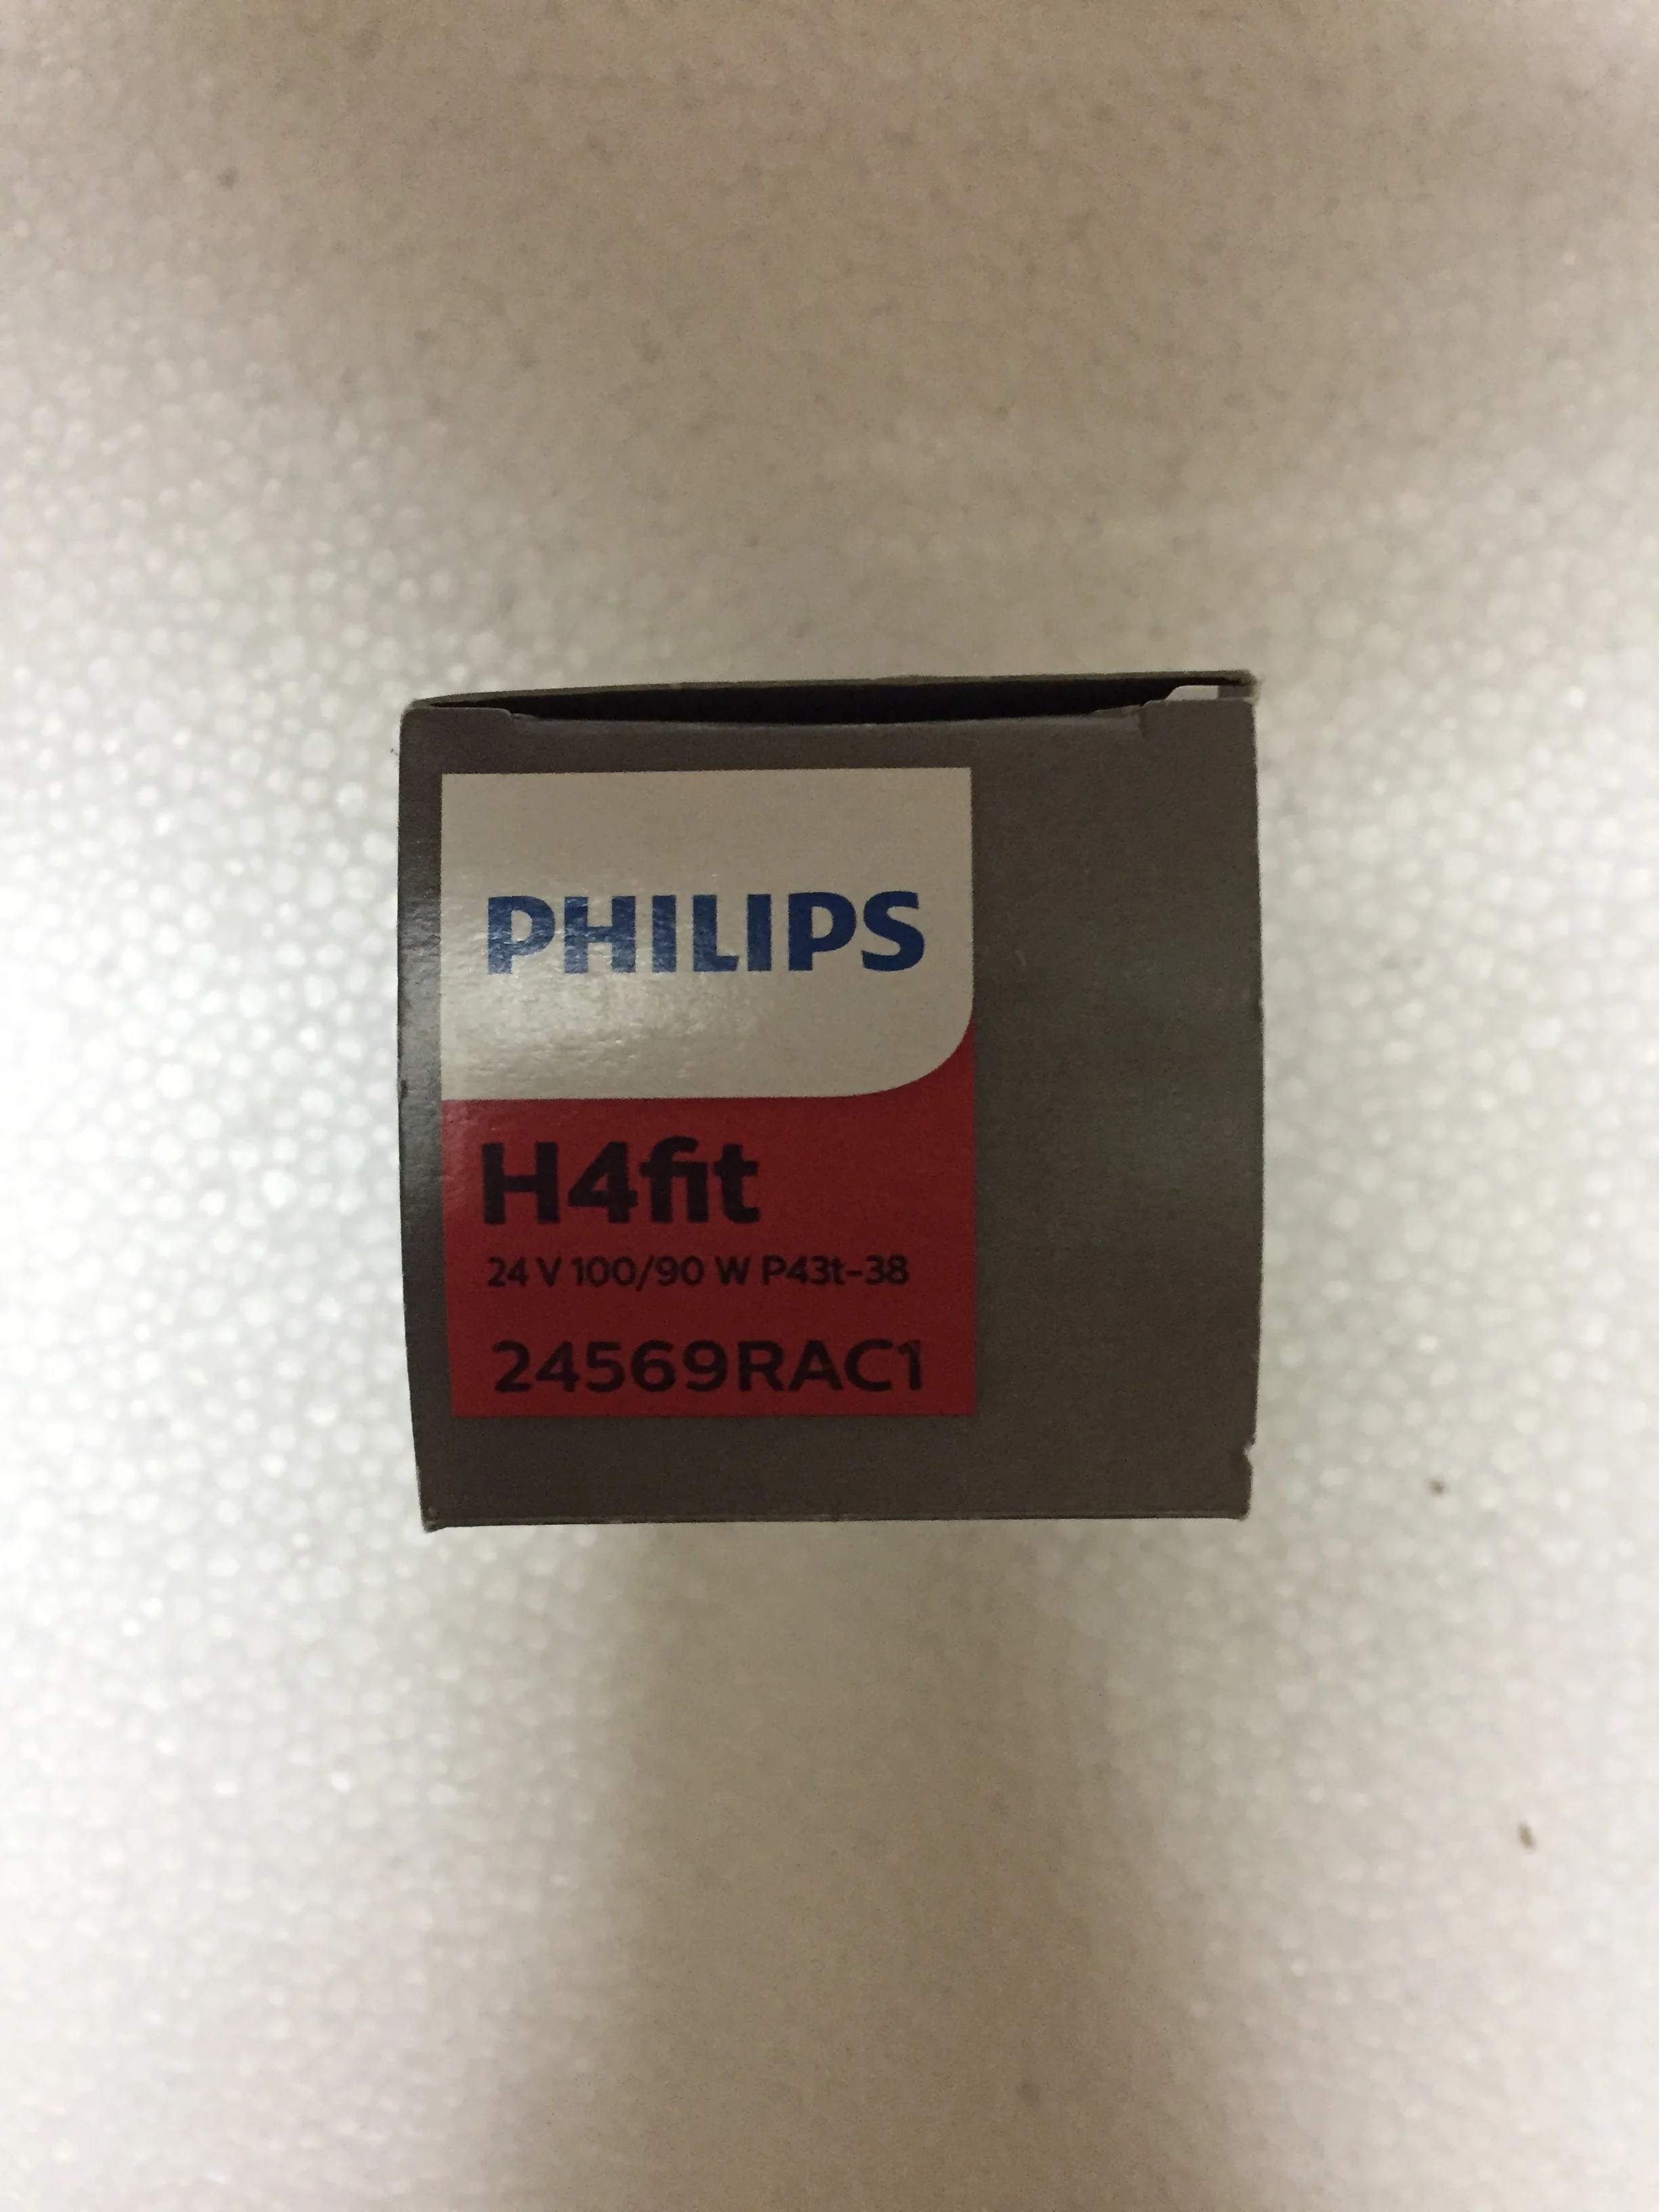 2 kos H4 24v 100/90w Philips Halogenskimi Žarometi Žarnica Original 24569RAC1 2